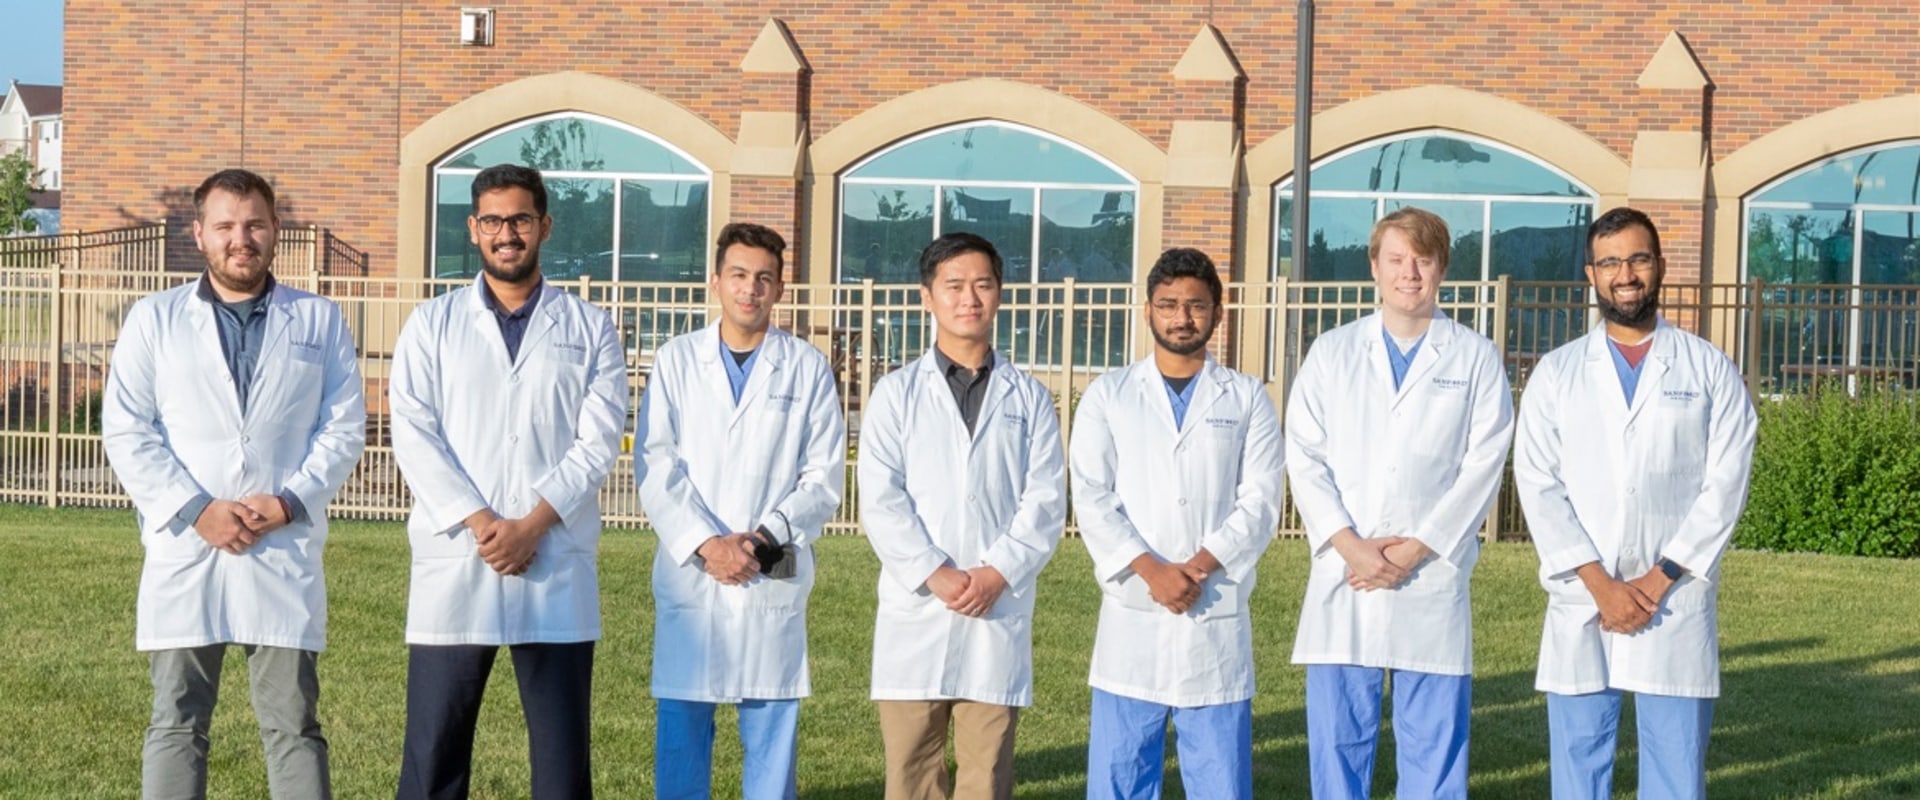 Successful Employment Prospects for International Medical School Graduates